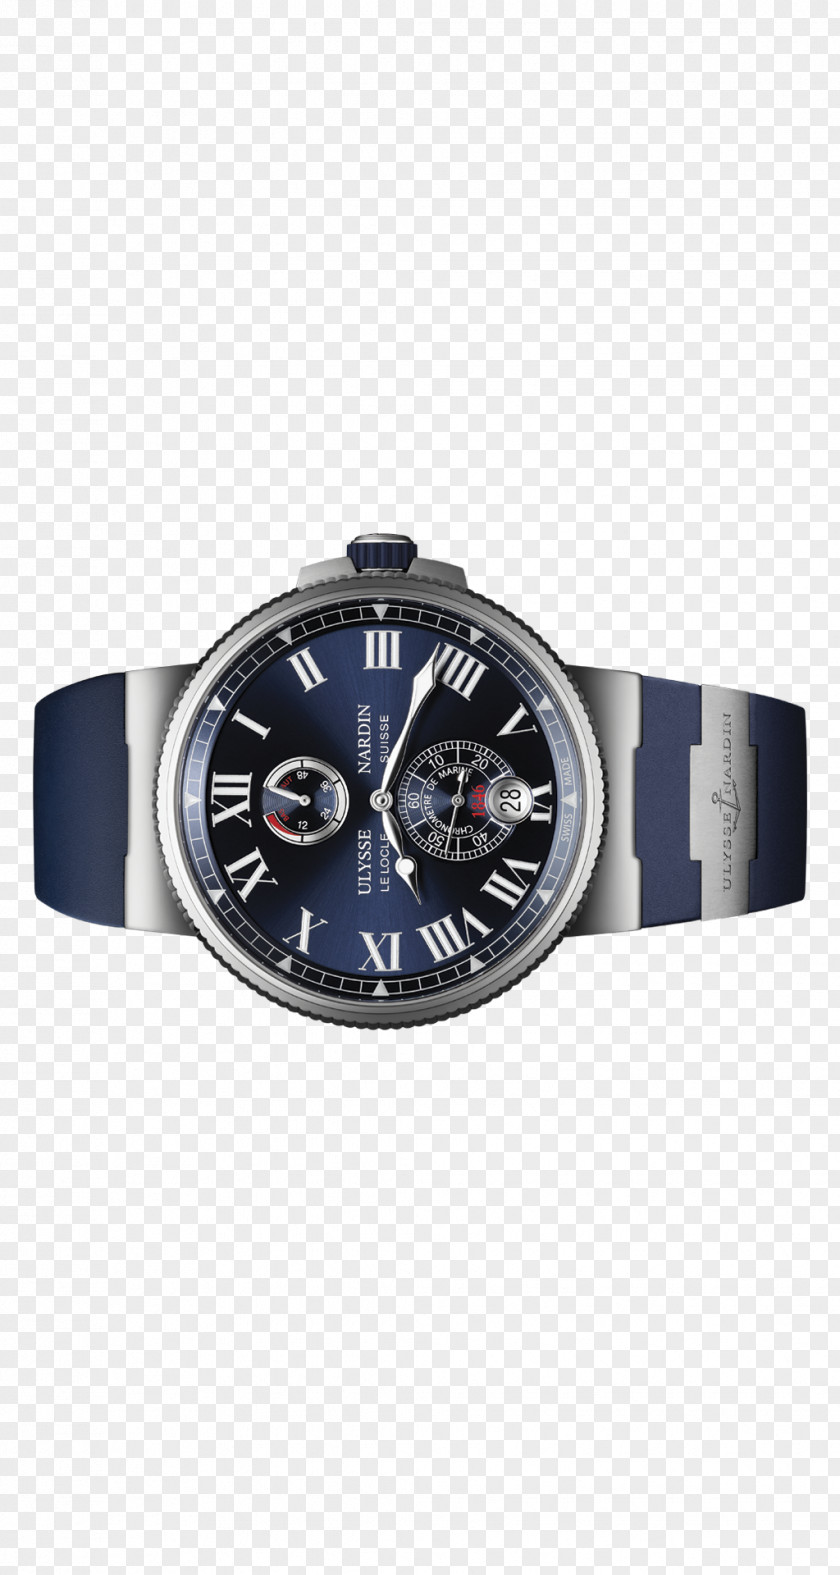 Chronometer Ulysse Nardin Watch Strap Marine Швейцарские часы PNG